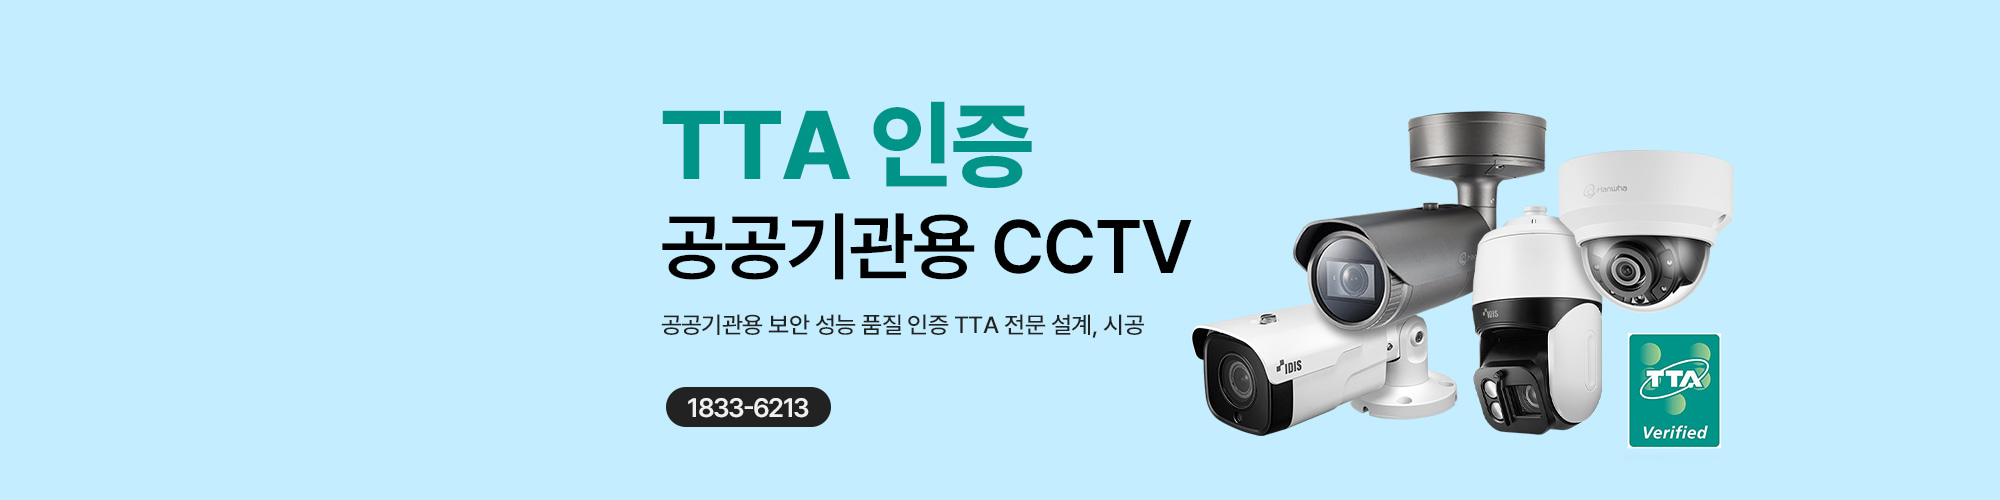 TTA인증 CCTV